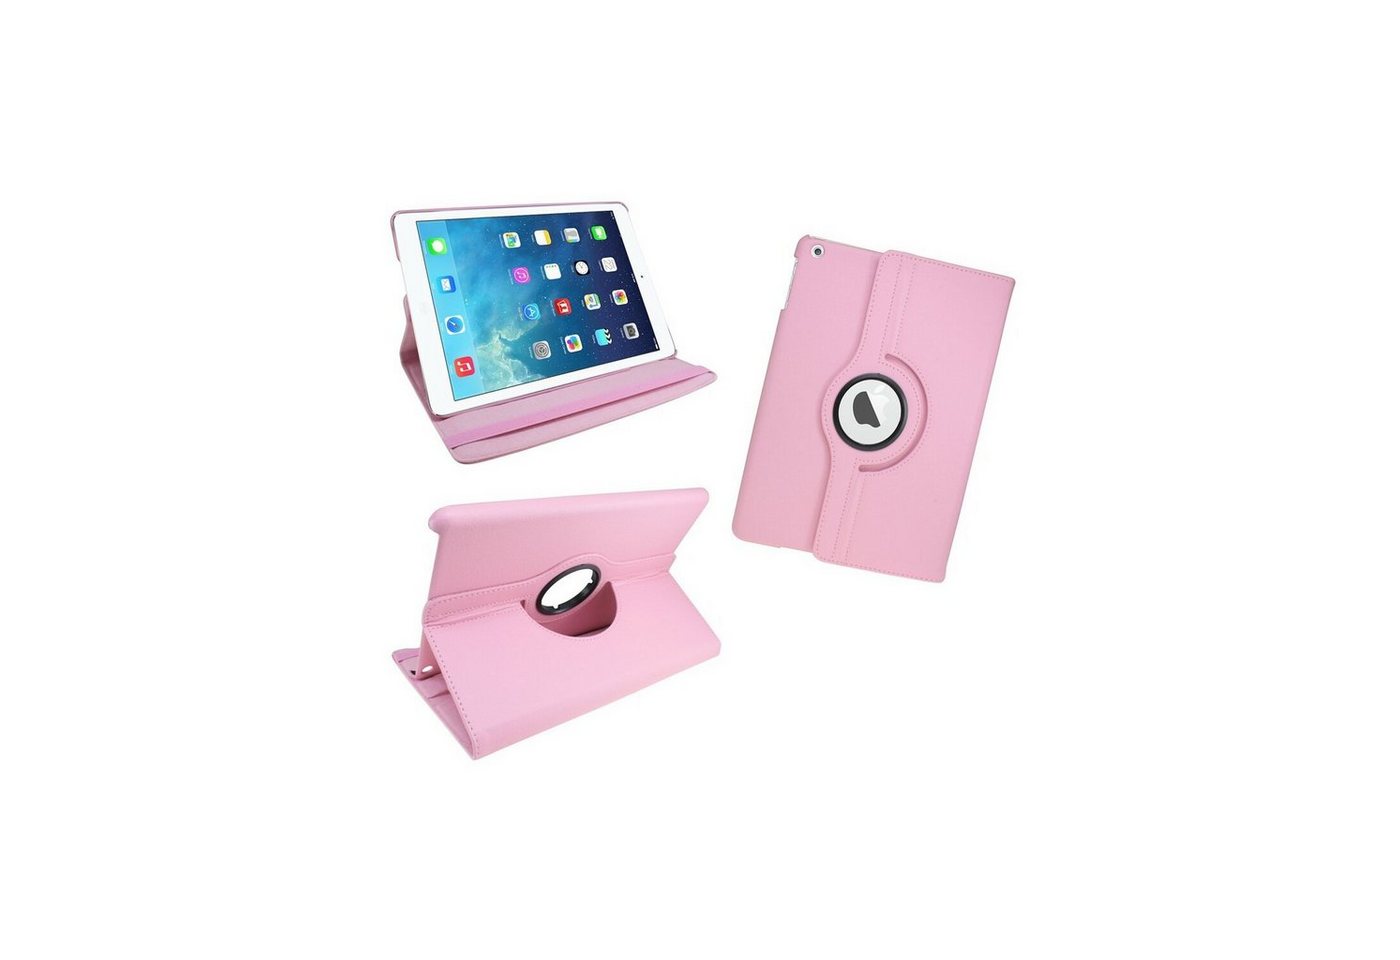 cofi1453 Tablet-Hülle Tablet Tasche 360° Rotierbar Schutzhülle für Ipad AIR Rosa von cofi1453